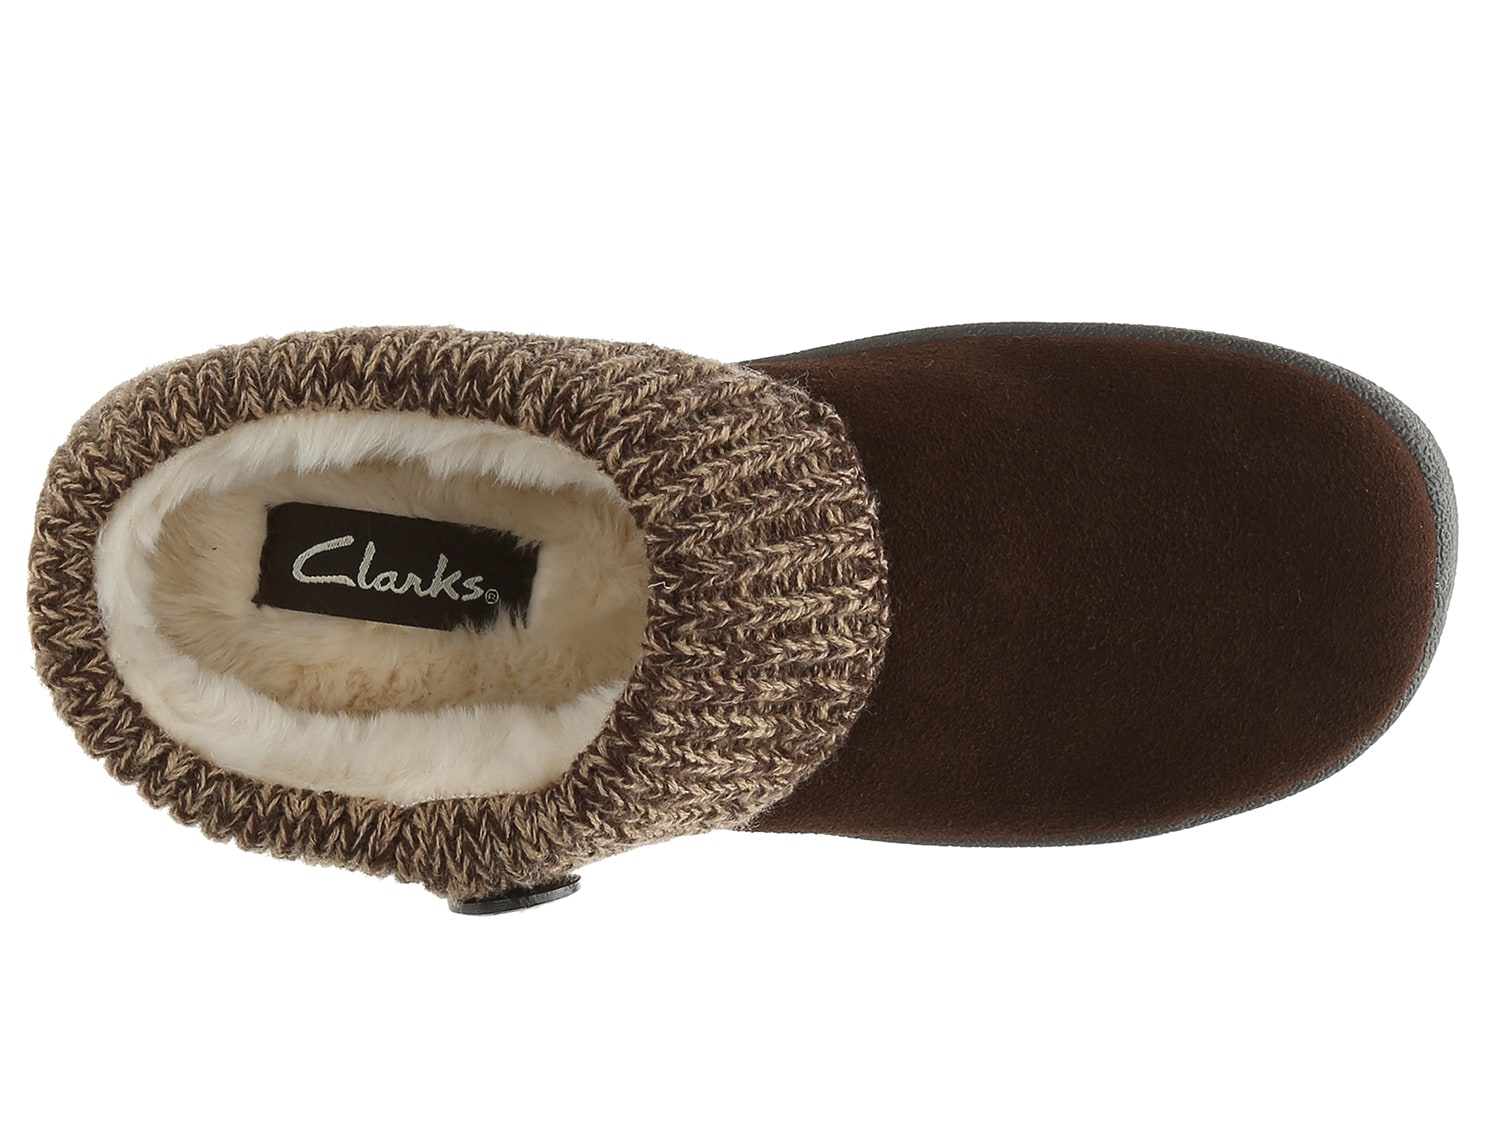 clarks scuff slippers